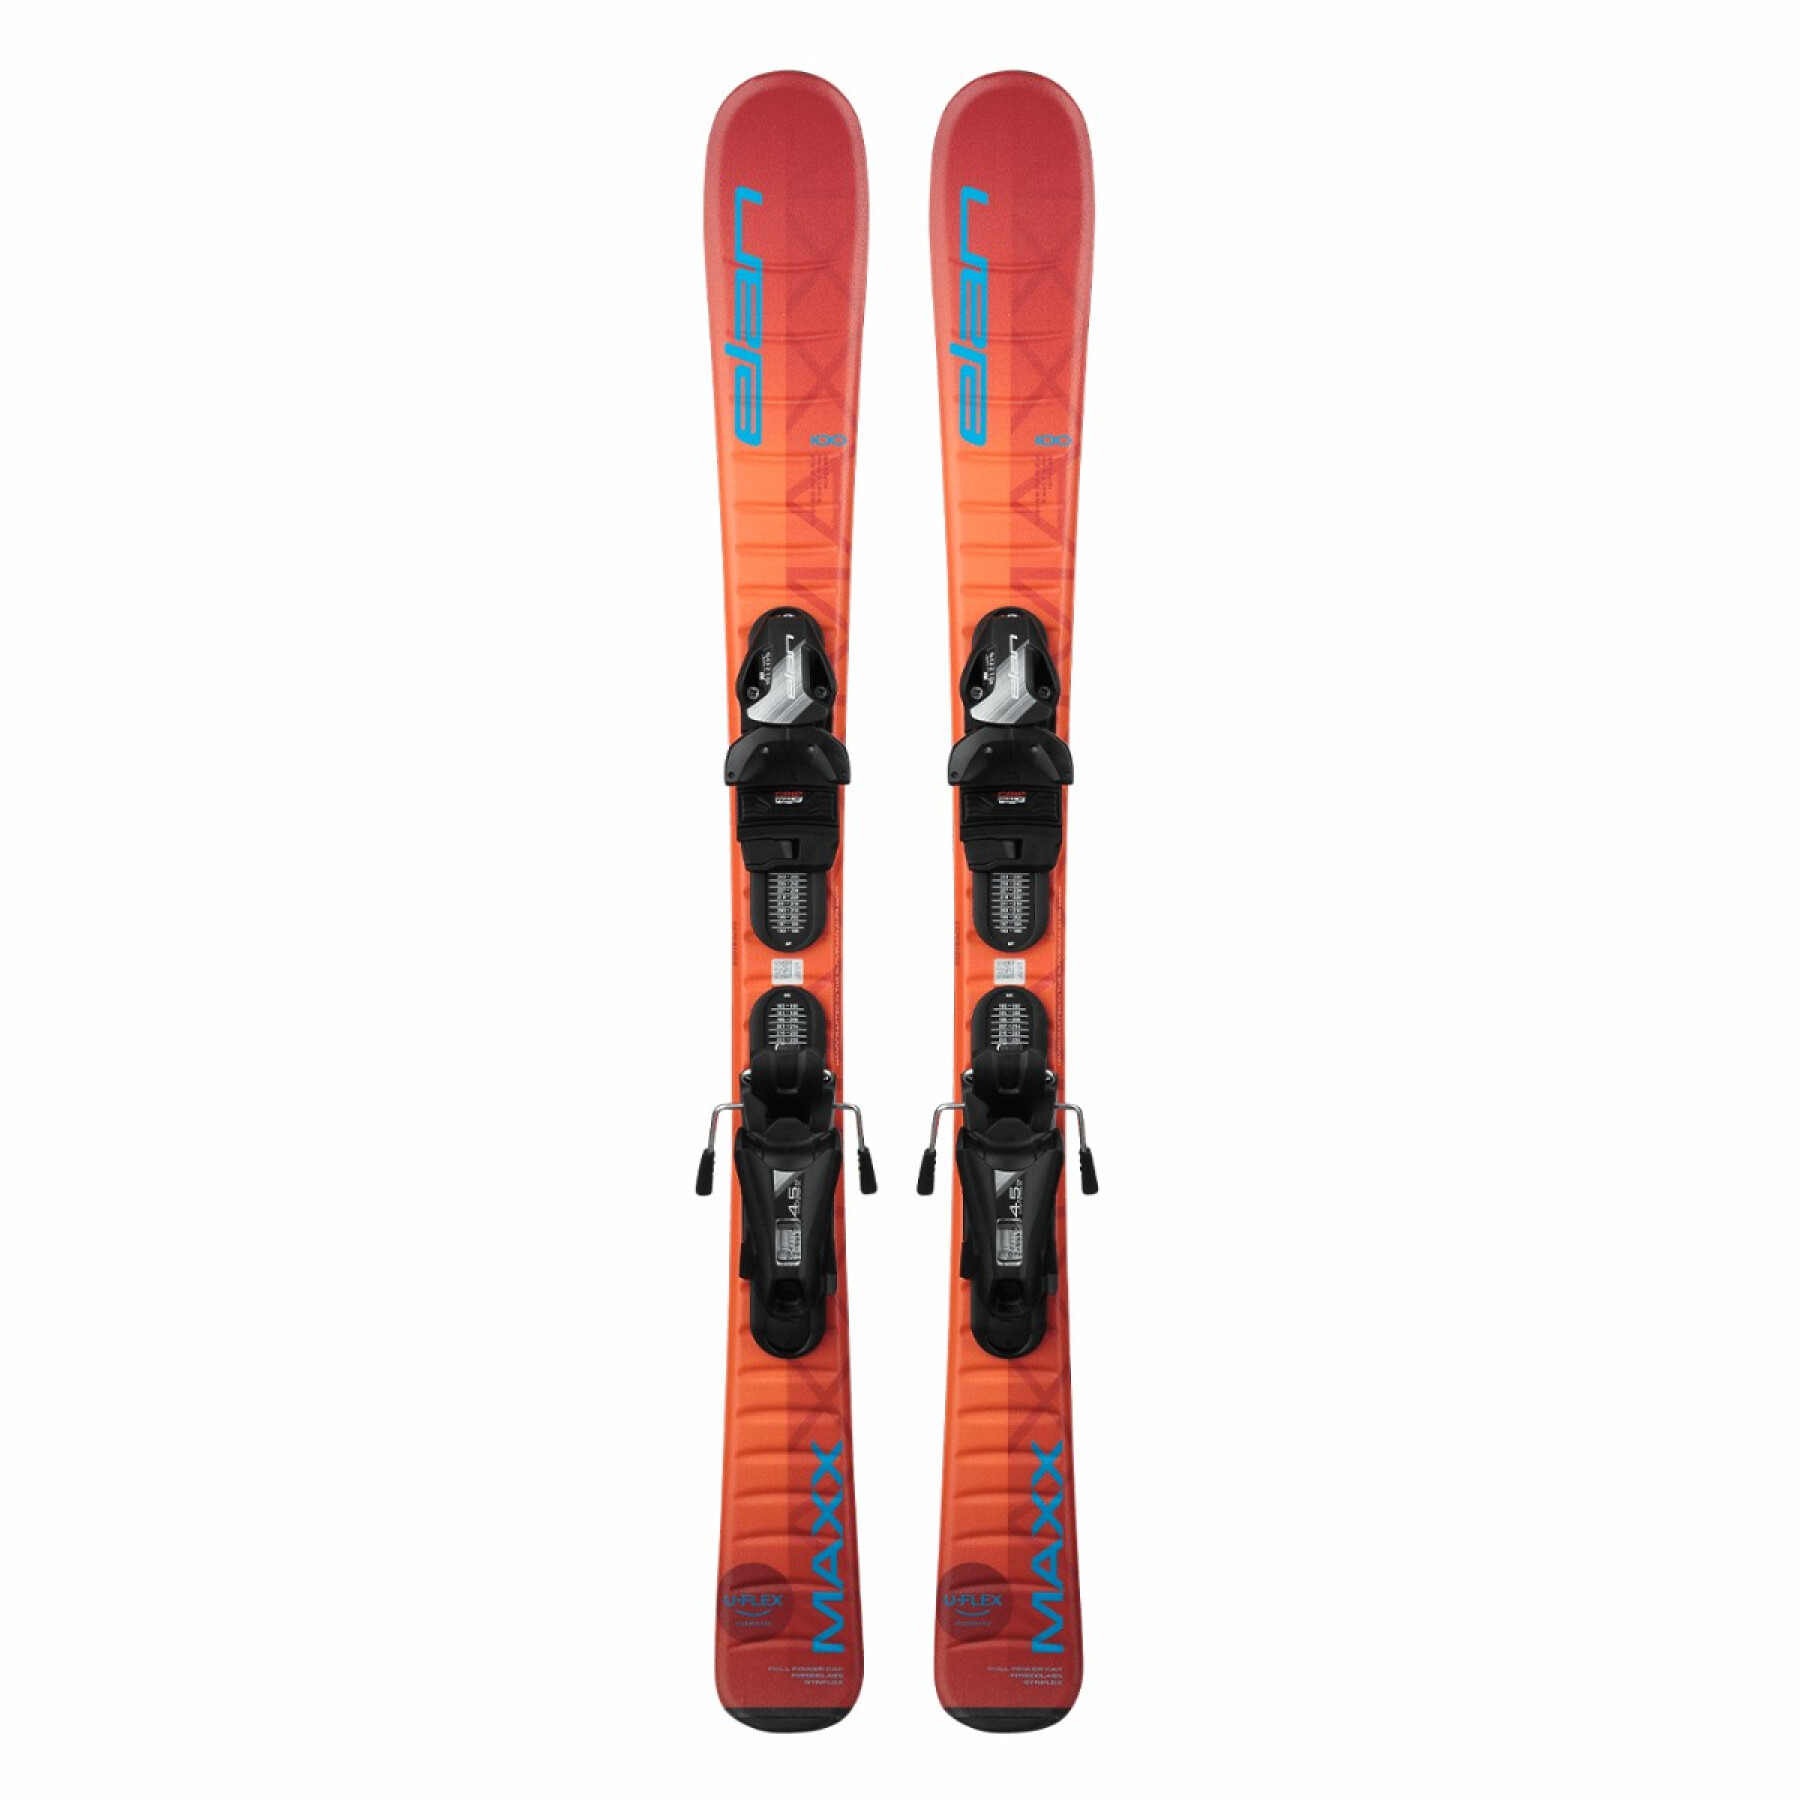 Pack maxx shift el 4.5 skis with child bindings Elan